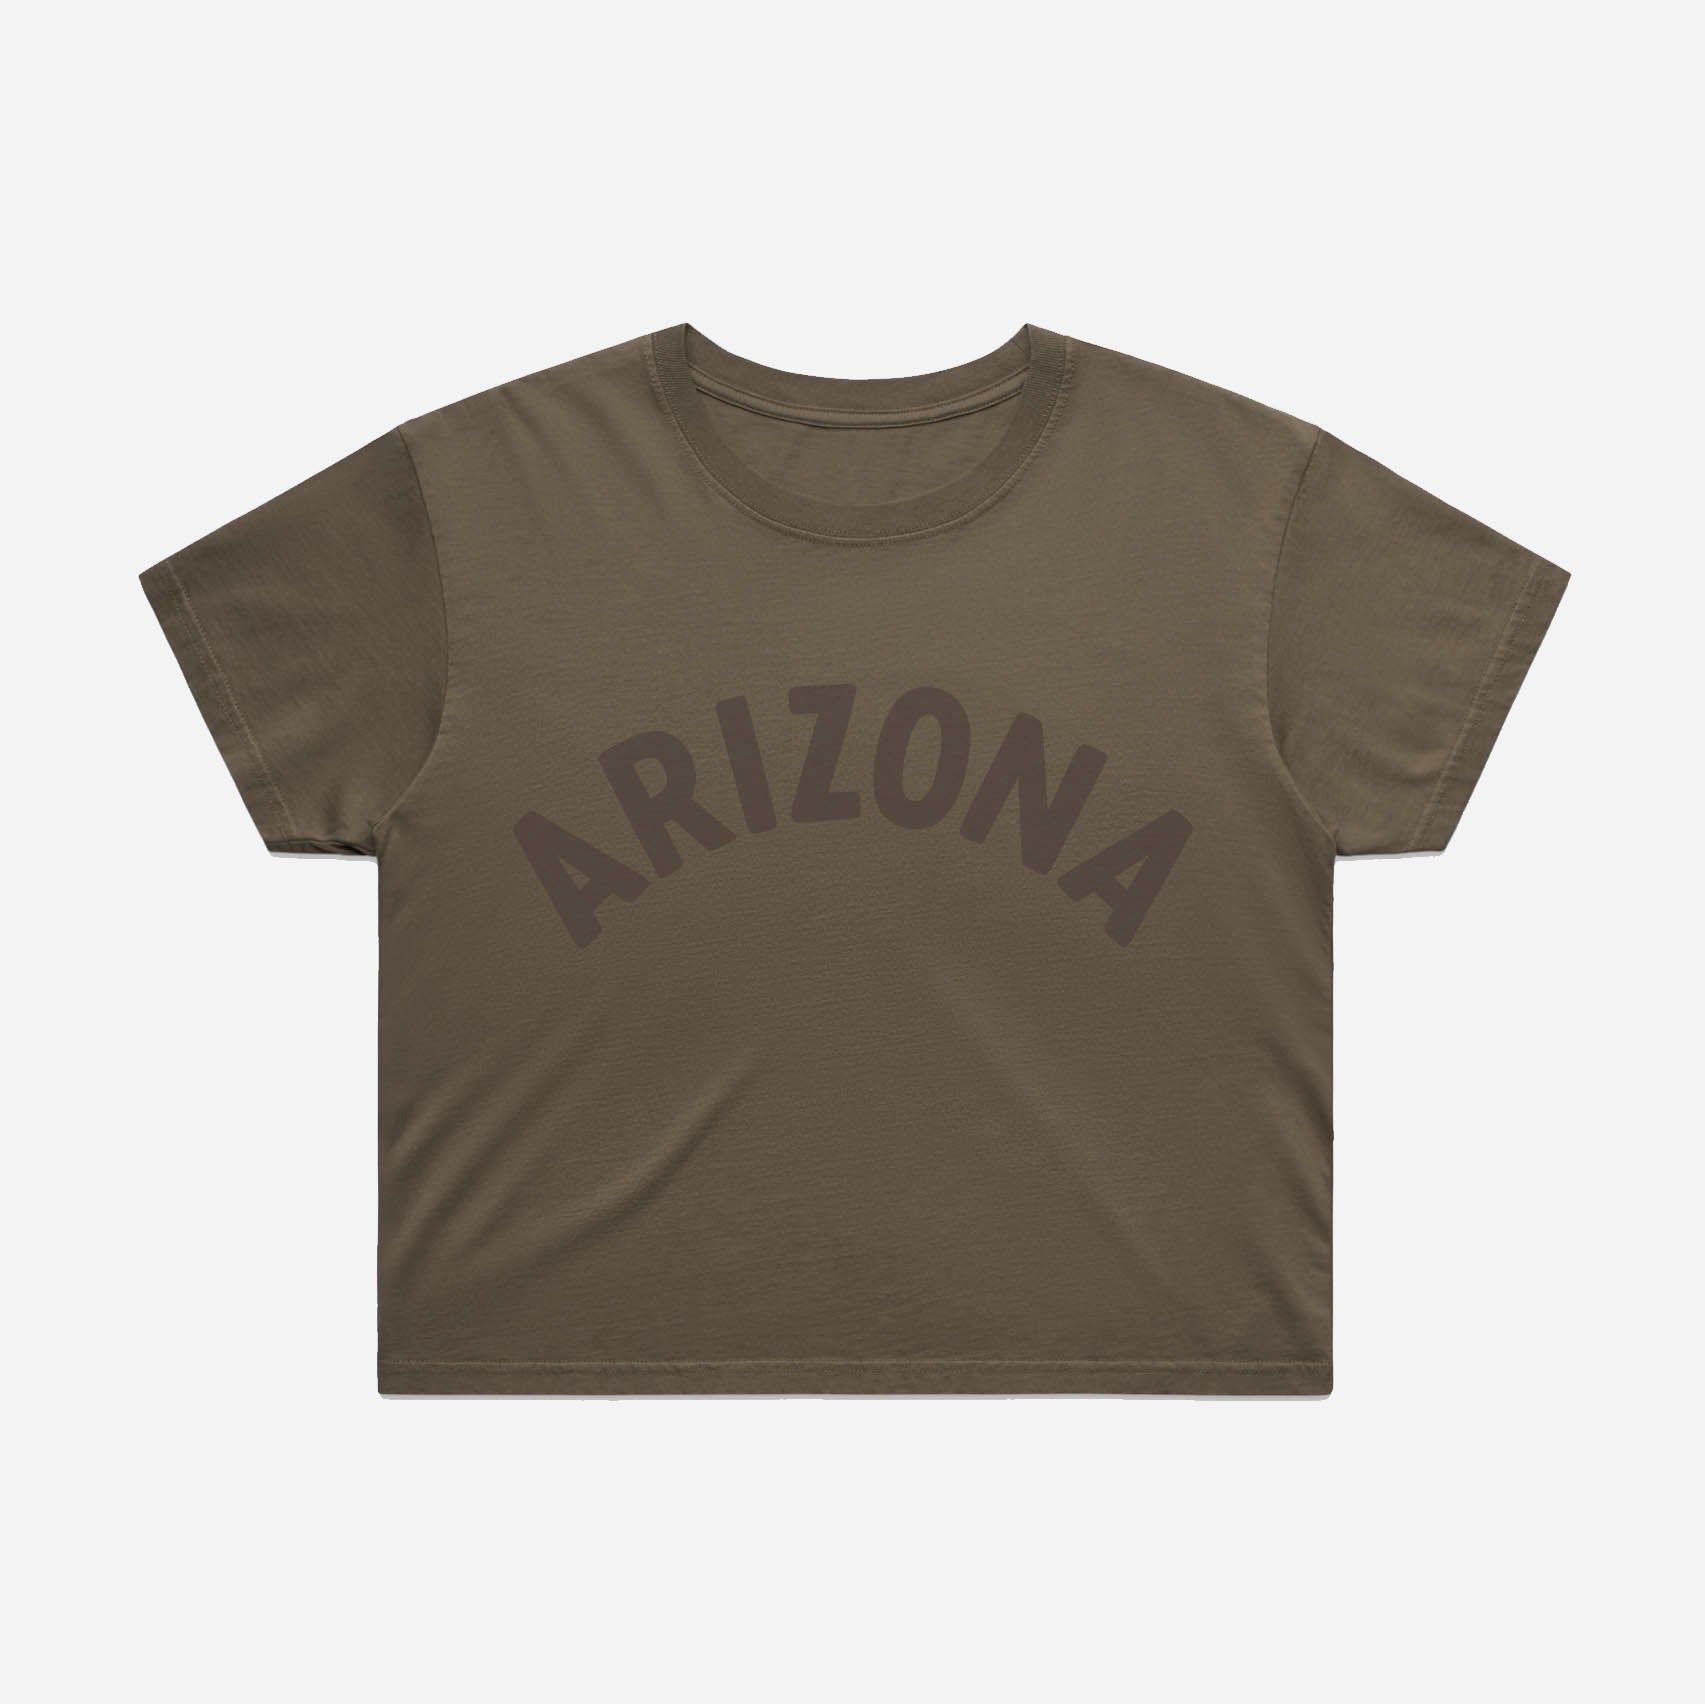 Arizona Crop Top